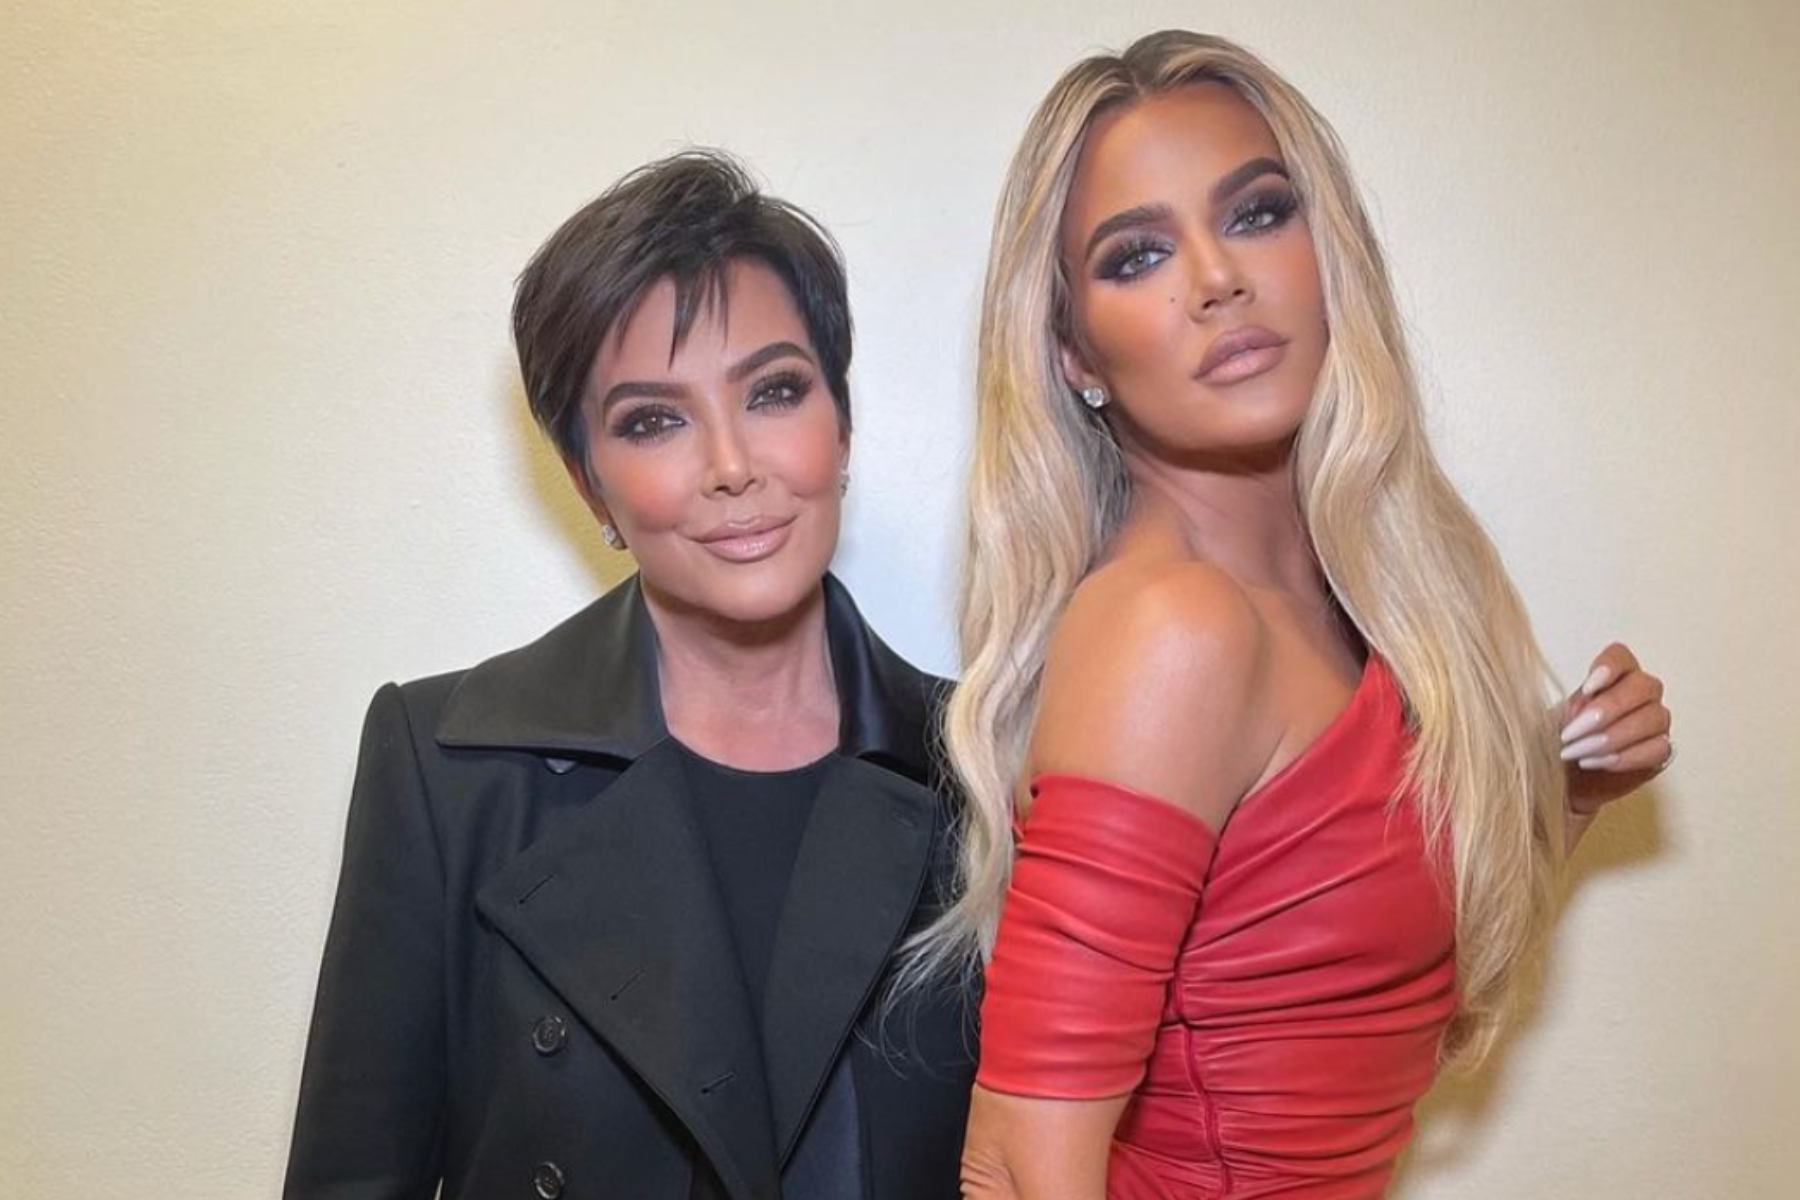 Image of Kris Jenner and Khloé Kardashian smiling at the camera together. Taken from Instagram